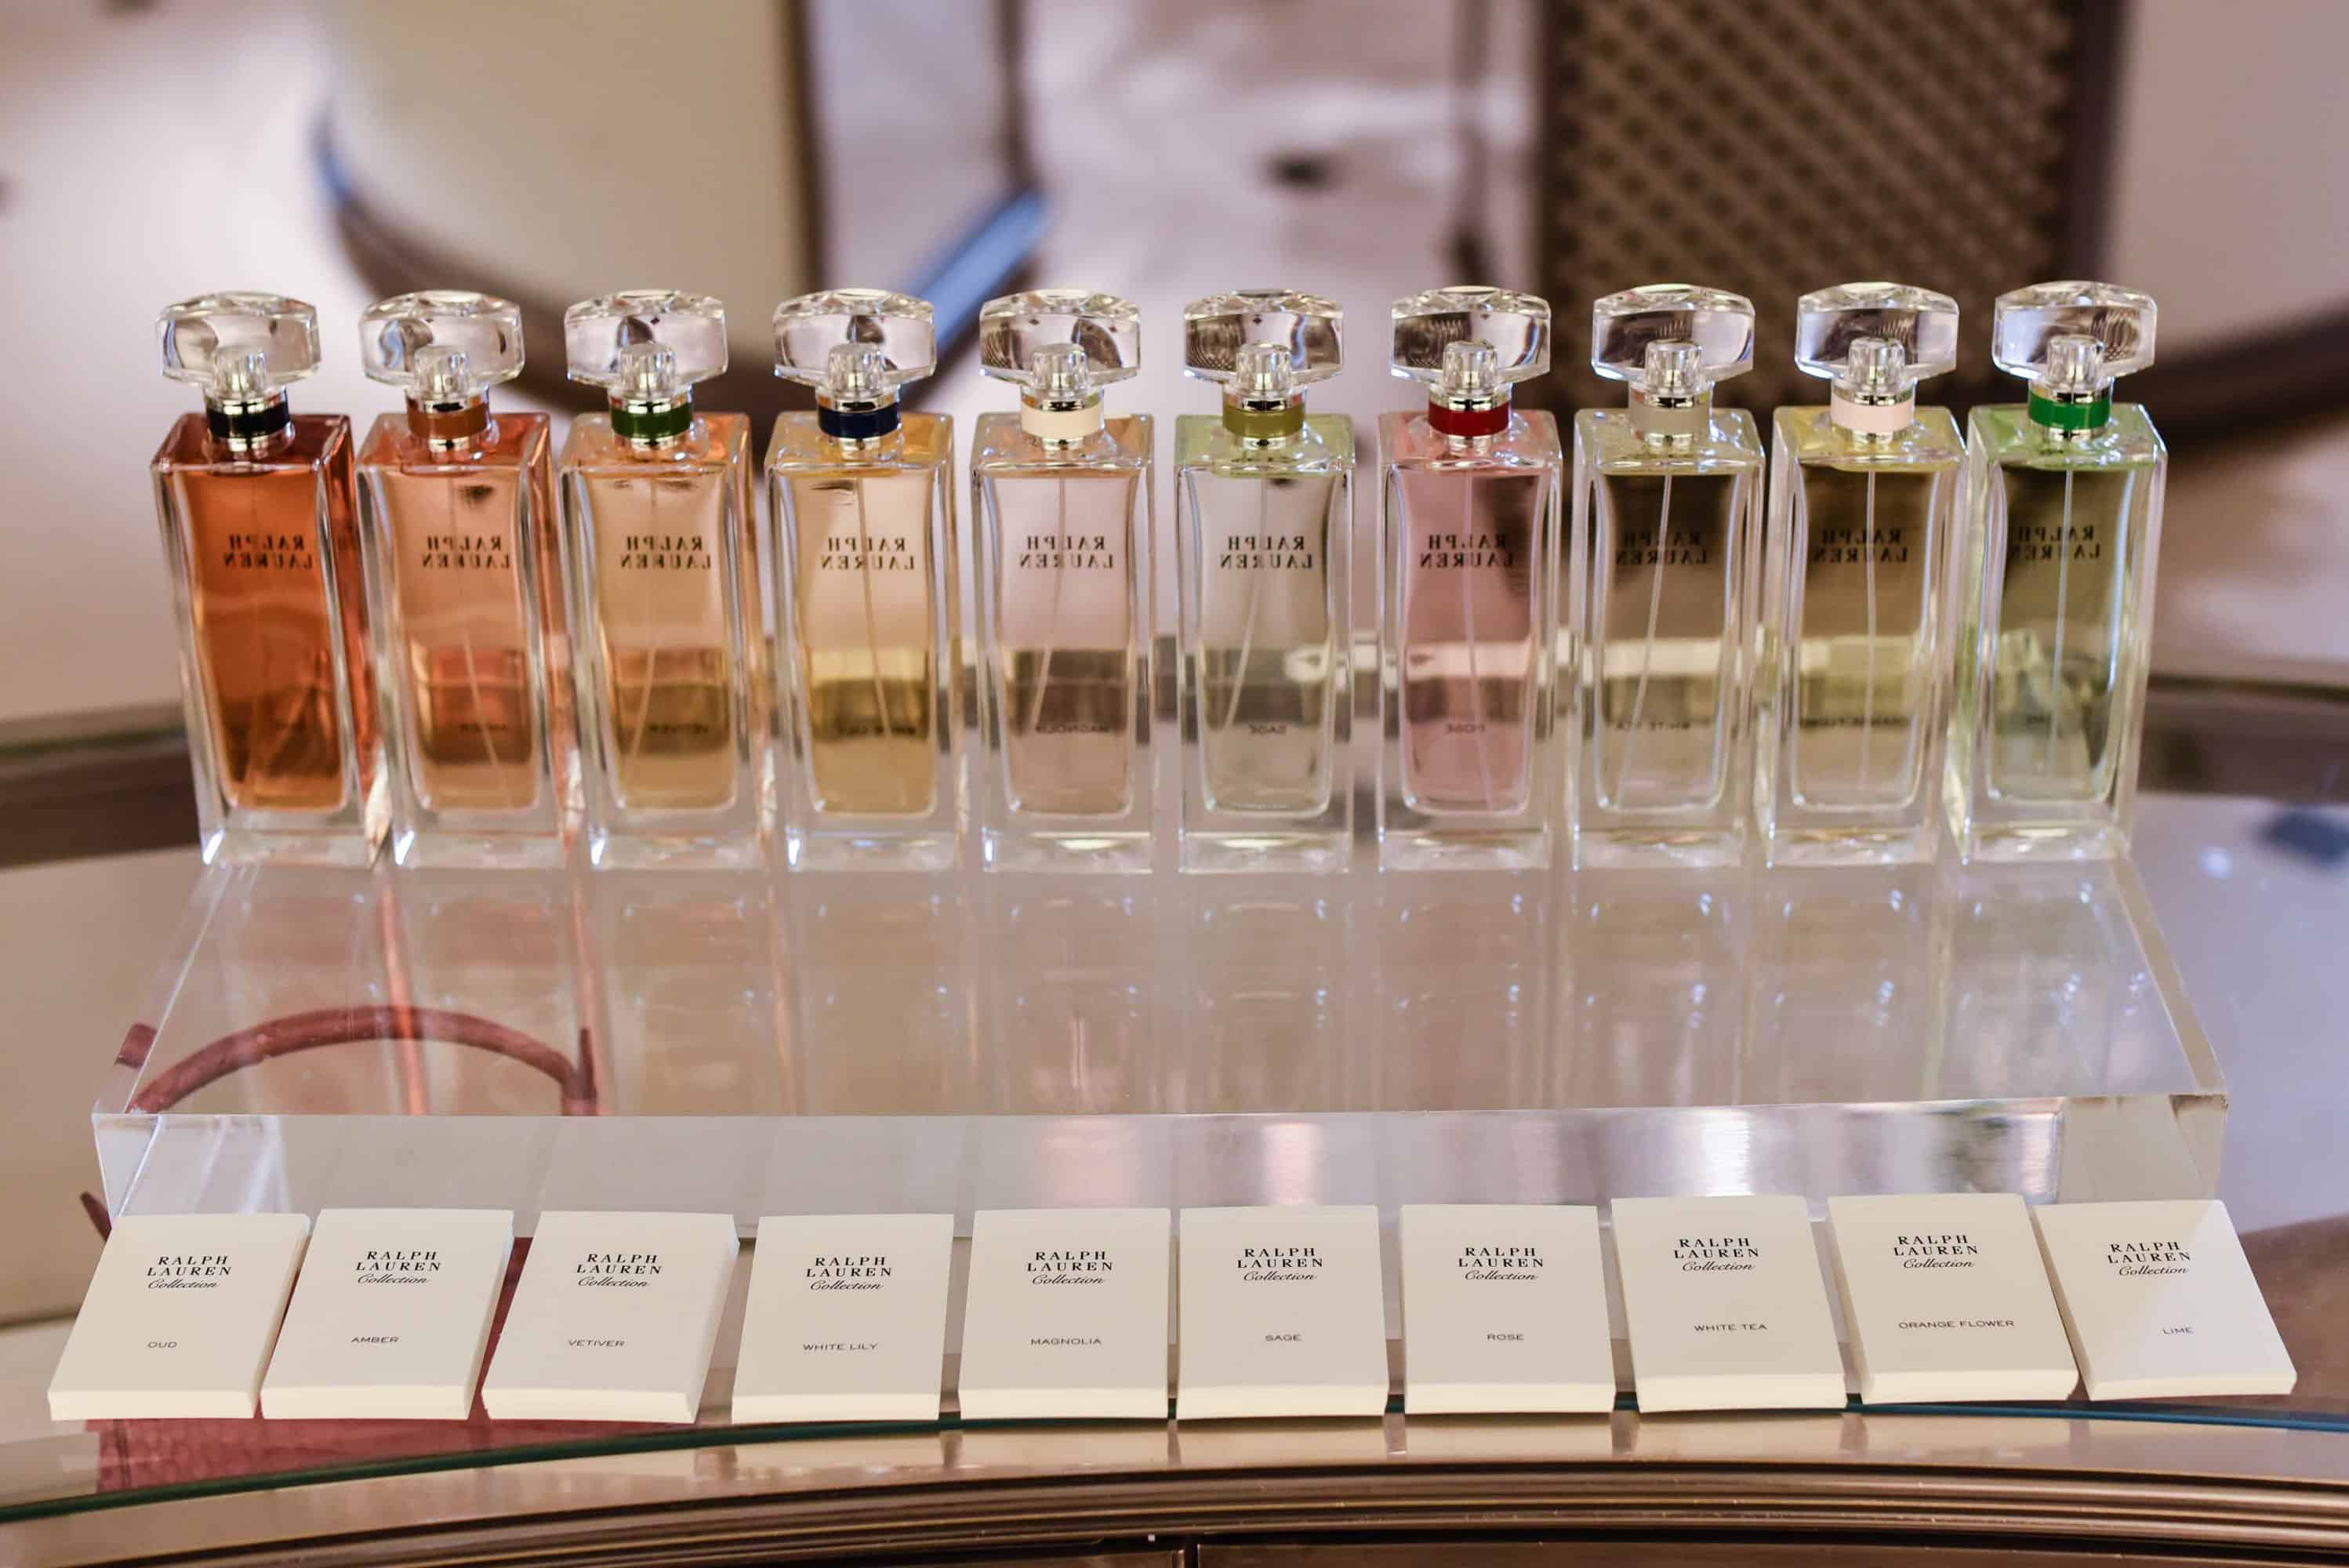 ralph lauren fragrance collection